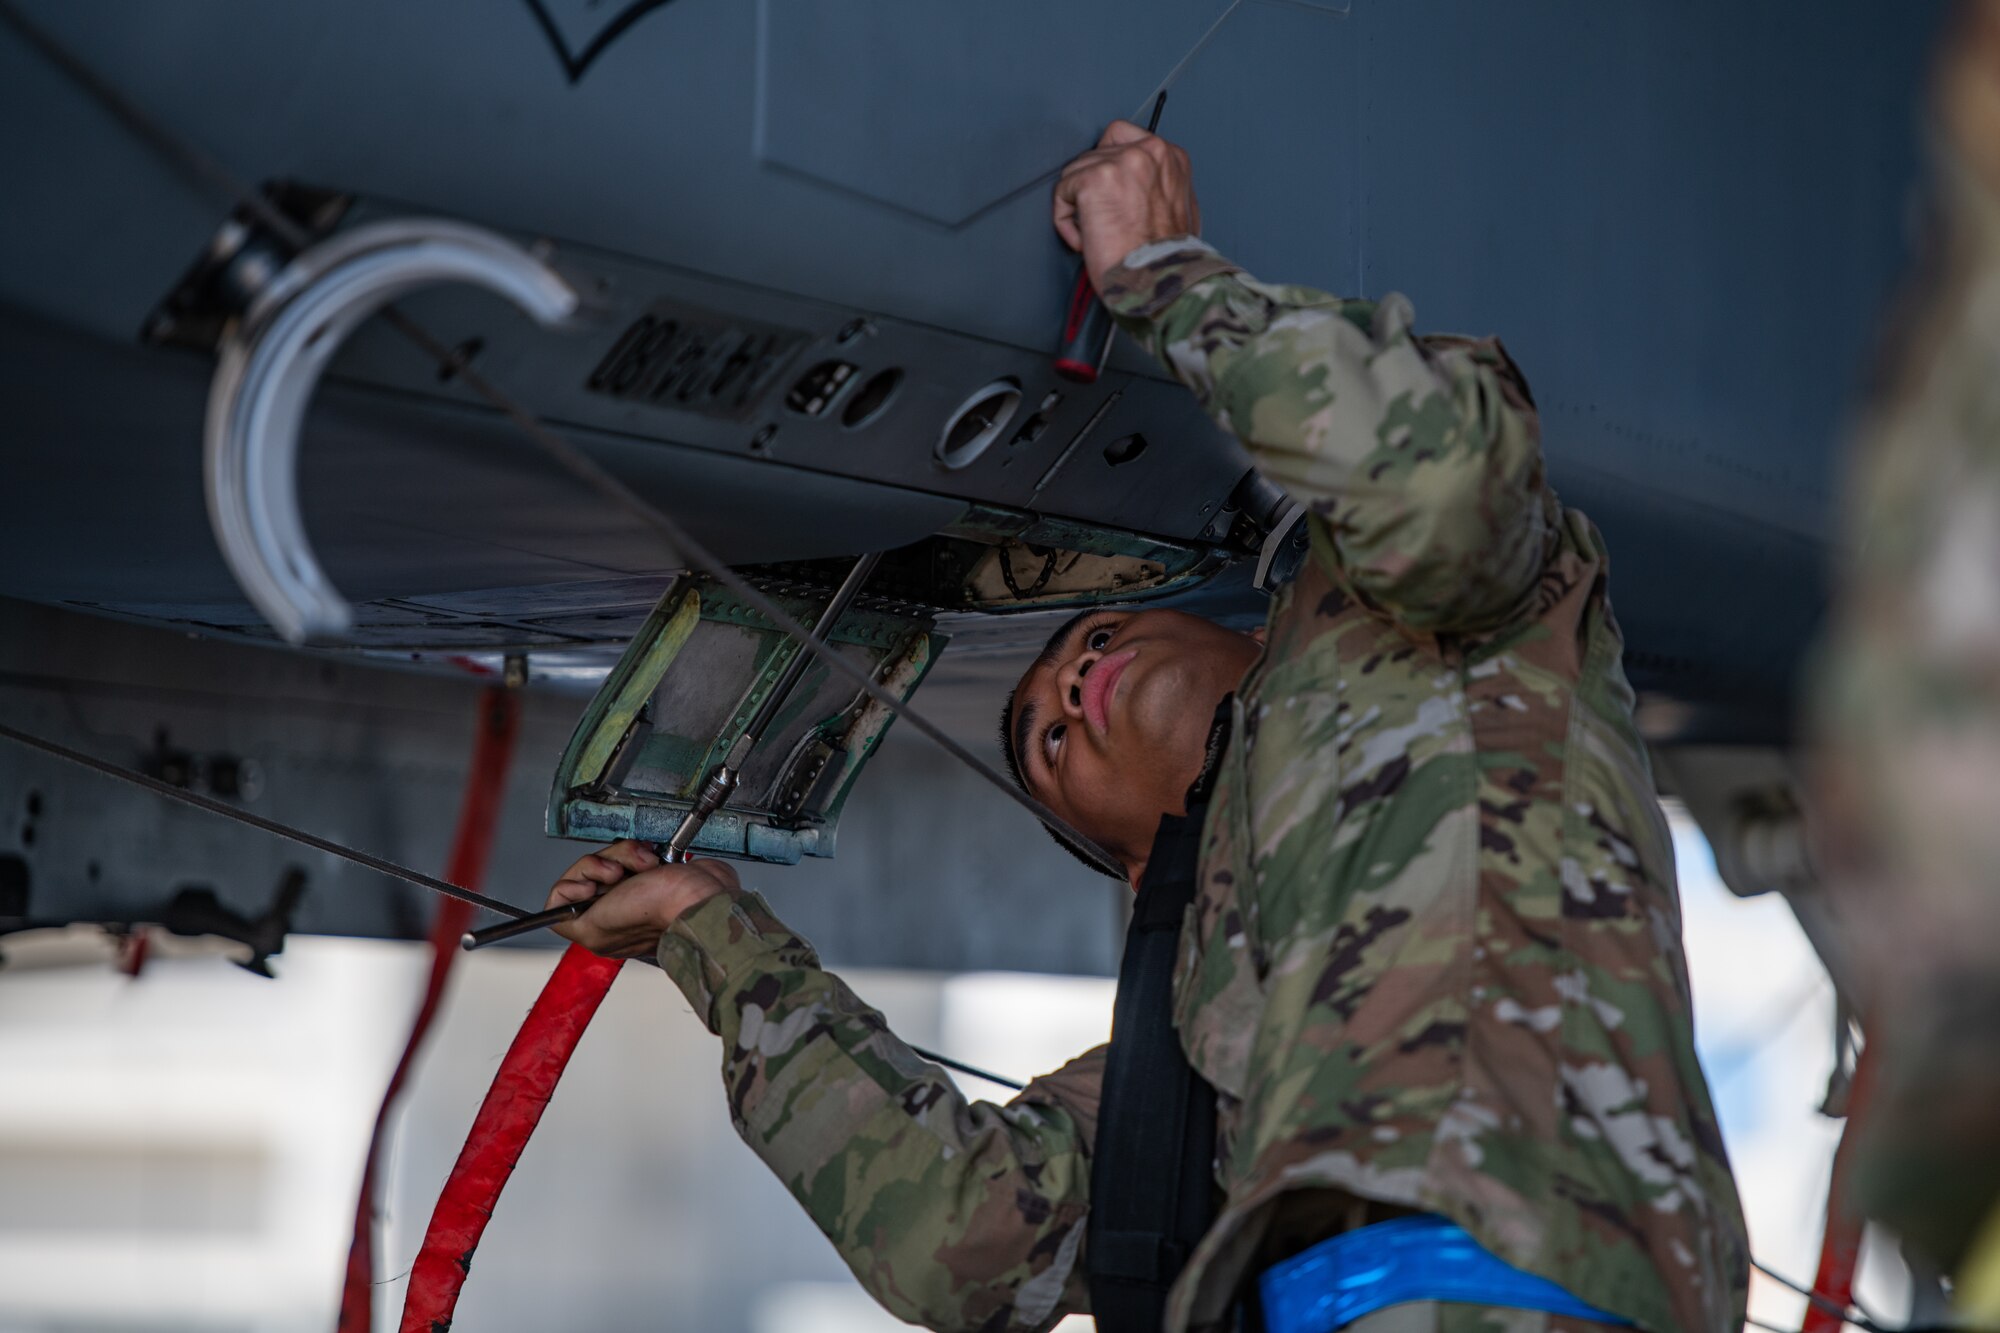 An airman tightens bolts underneath a fighter jet.